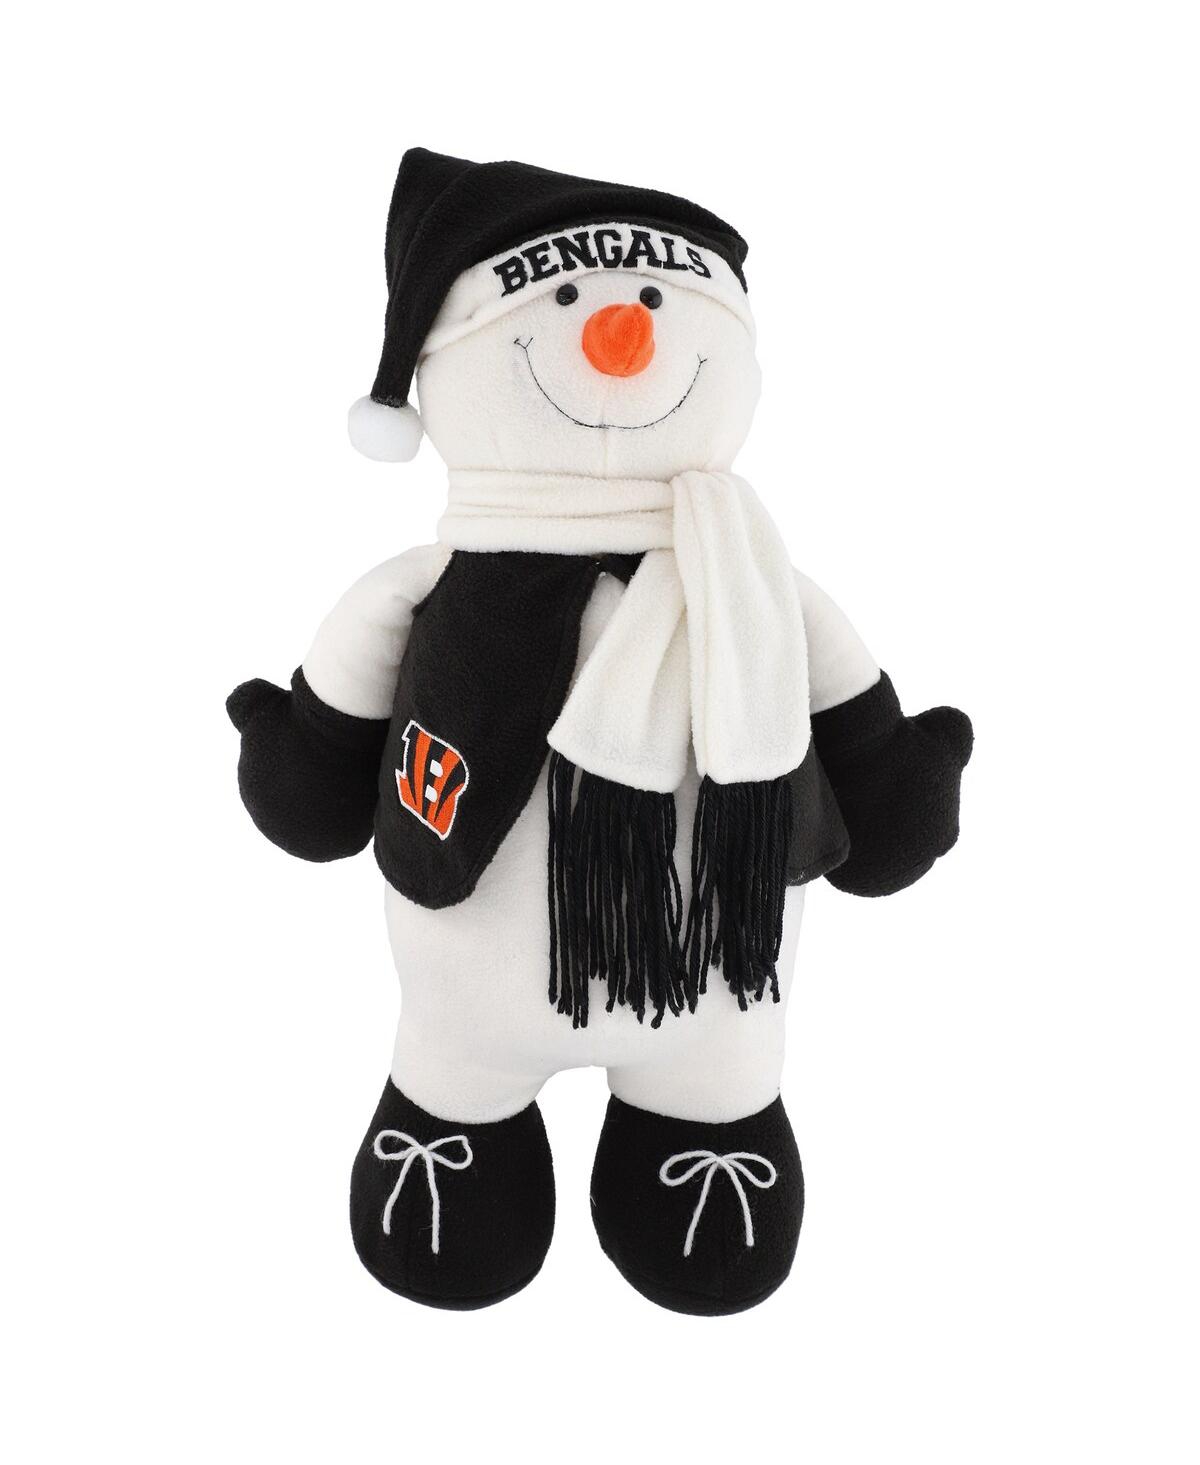 The Memory Company Cincinnati Bengals 17" Frosty Snowman Mascot - White, Black